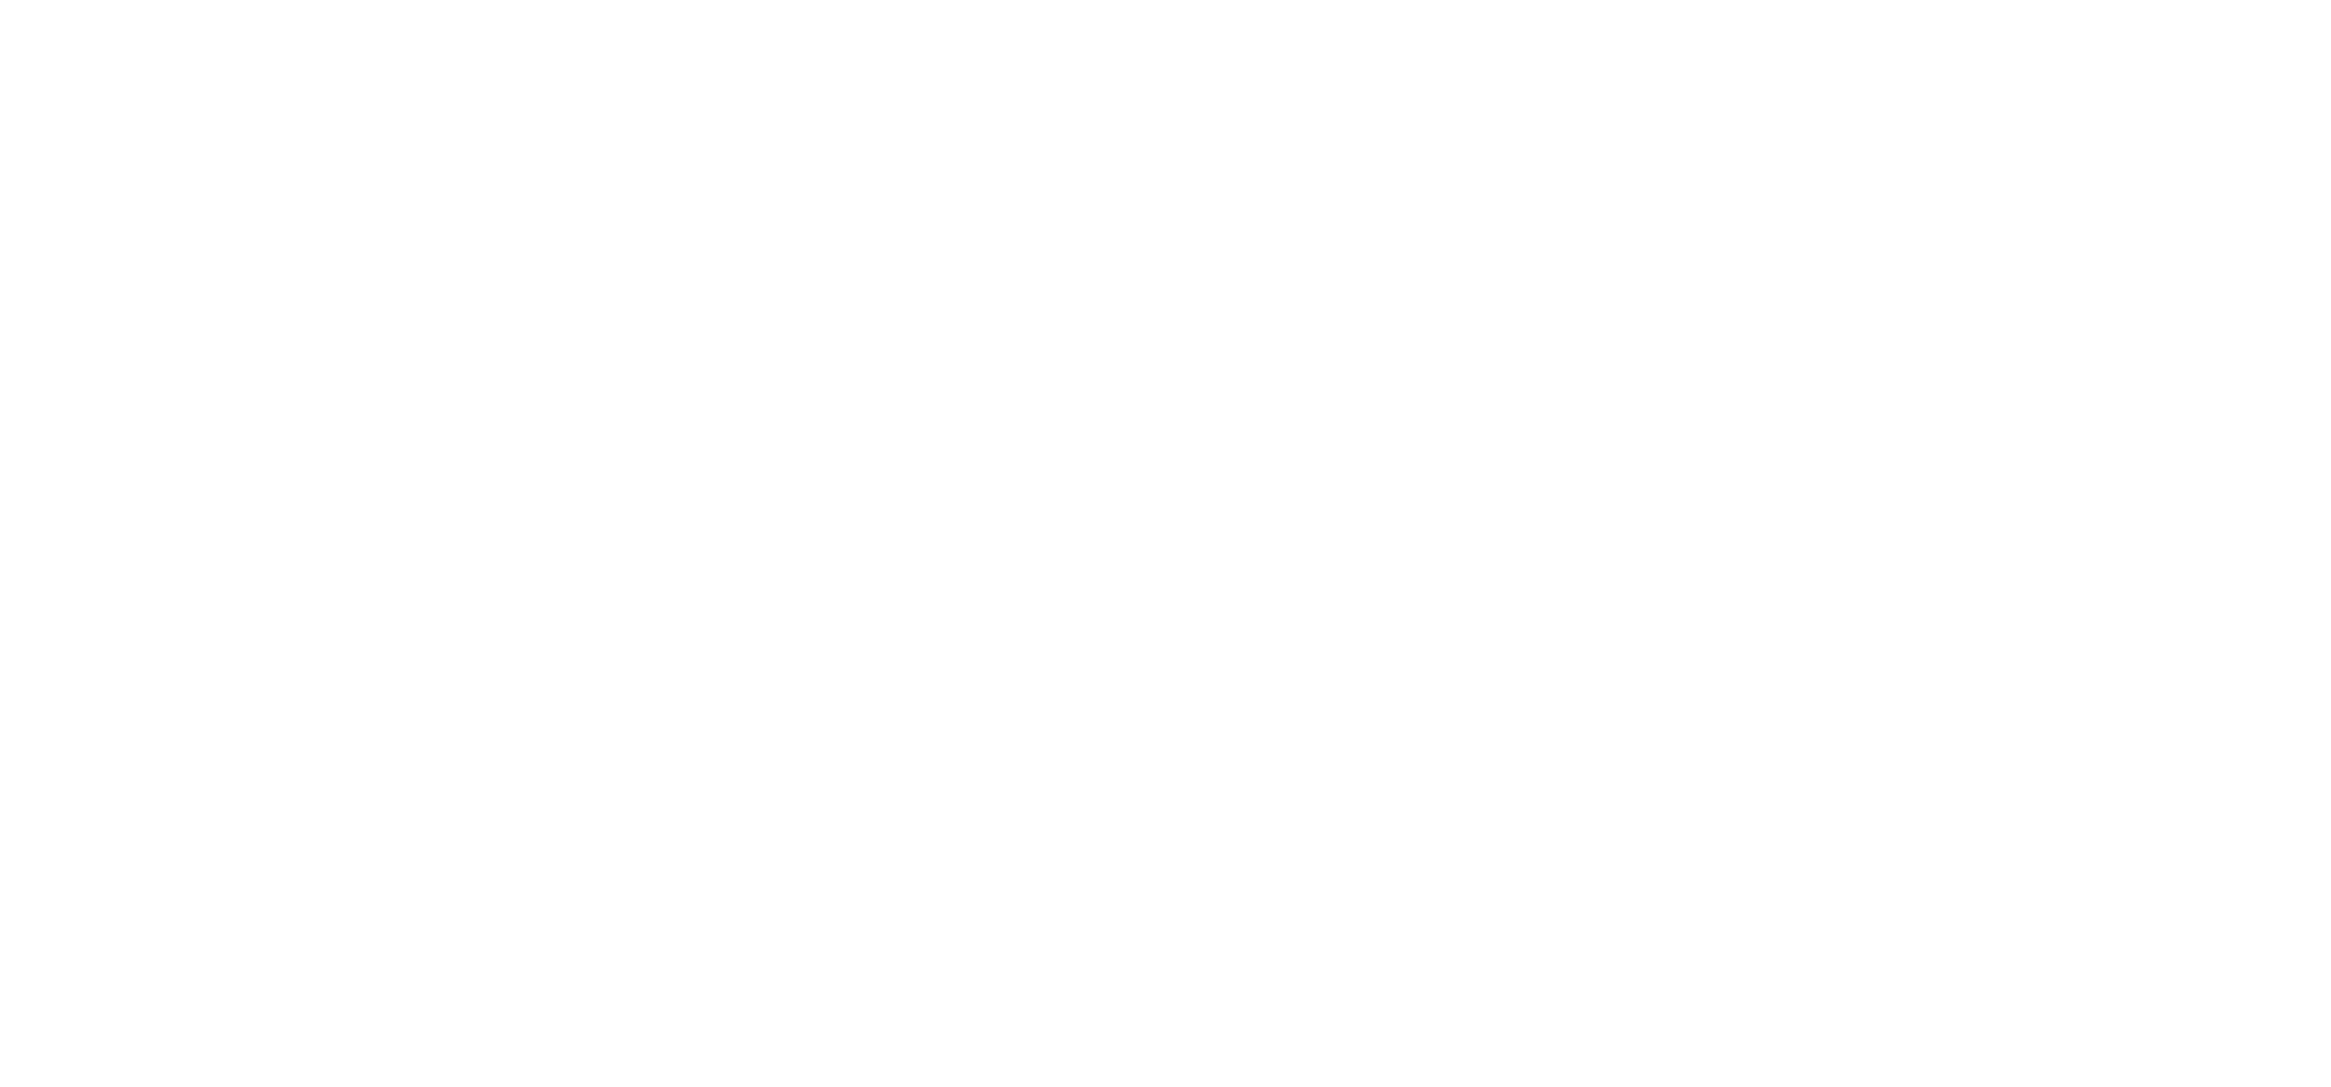 Reebok Logo Background PNG Image